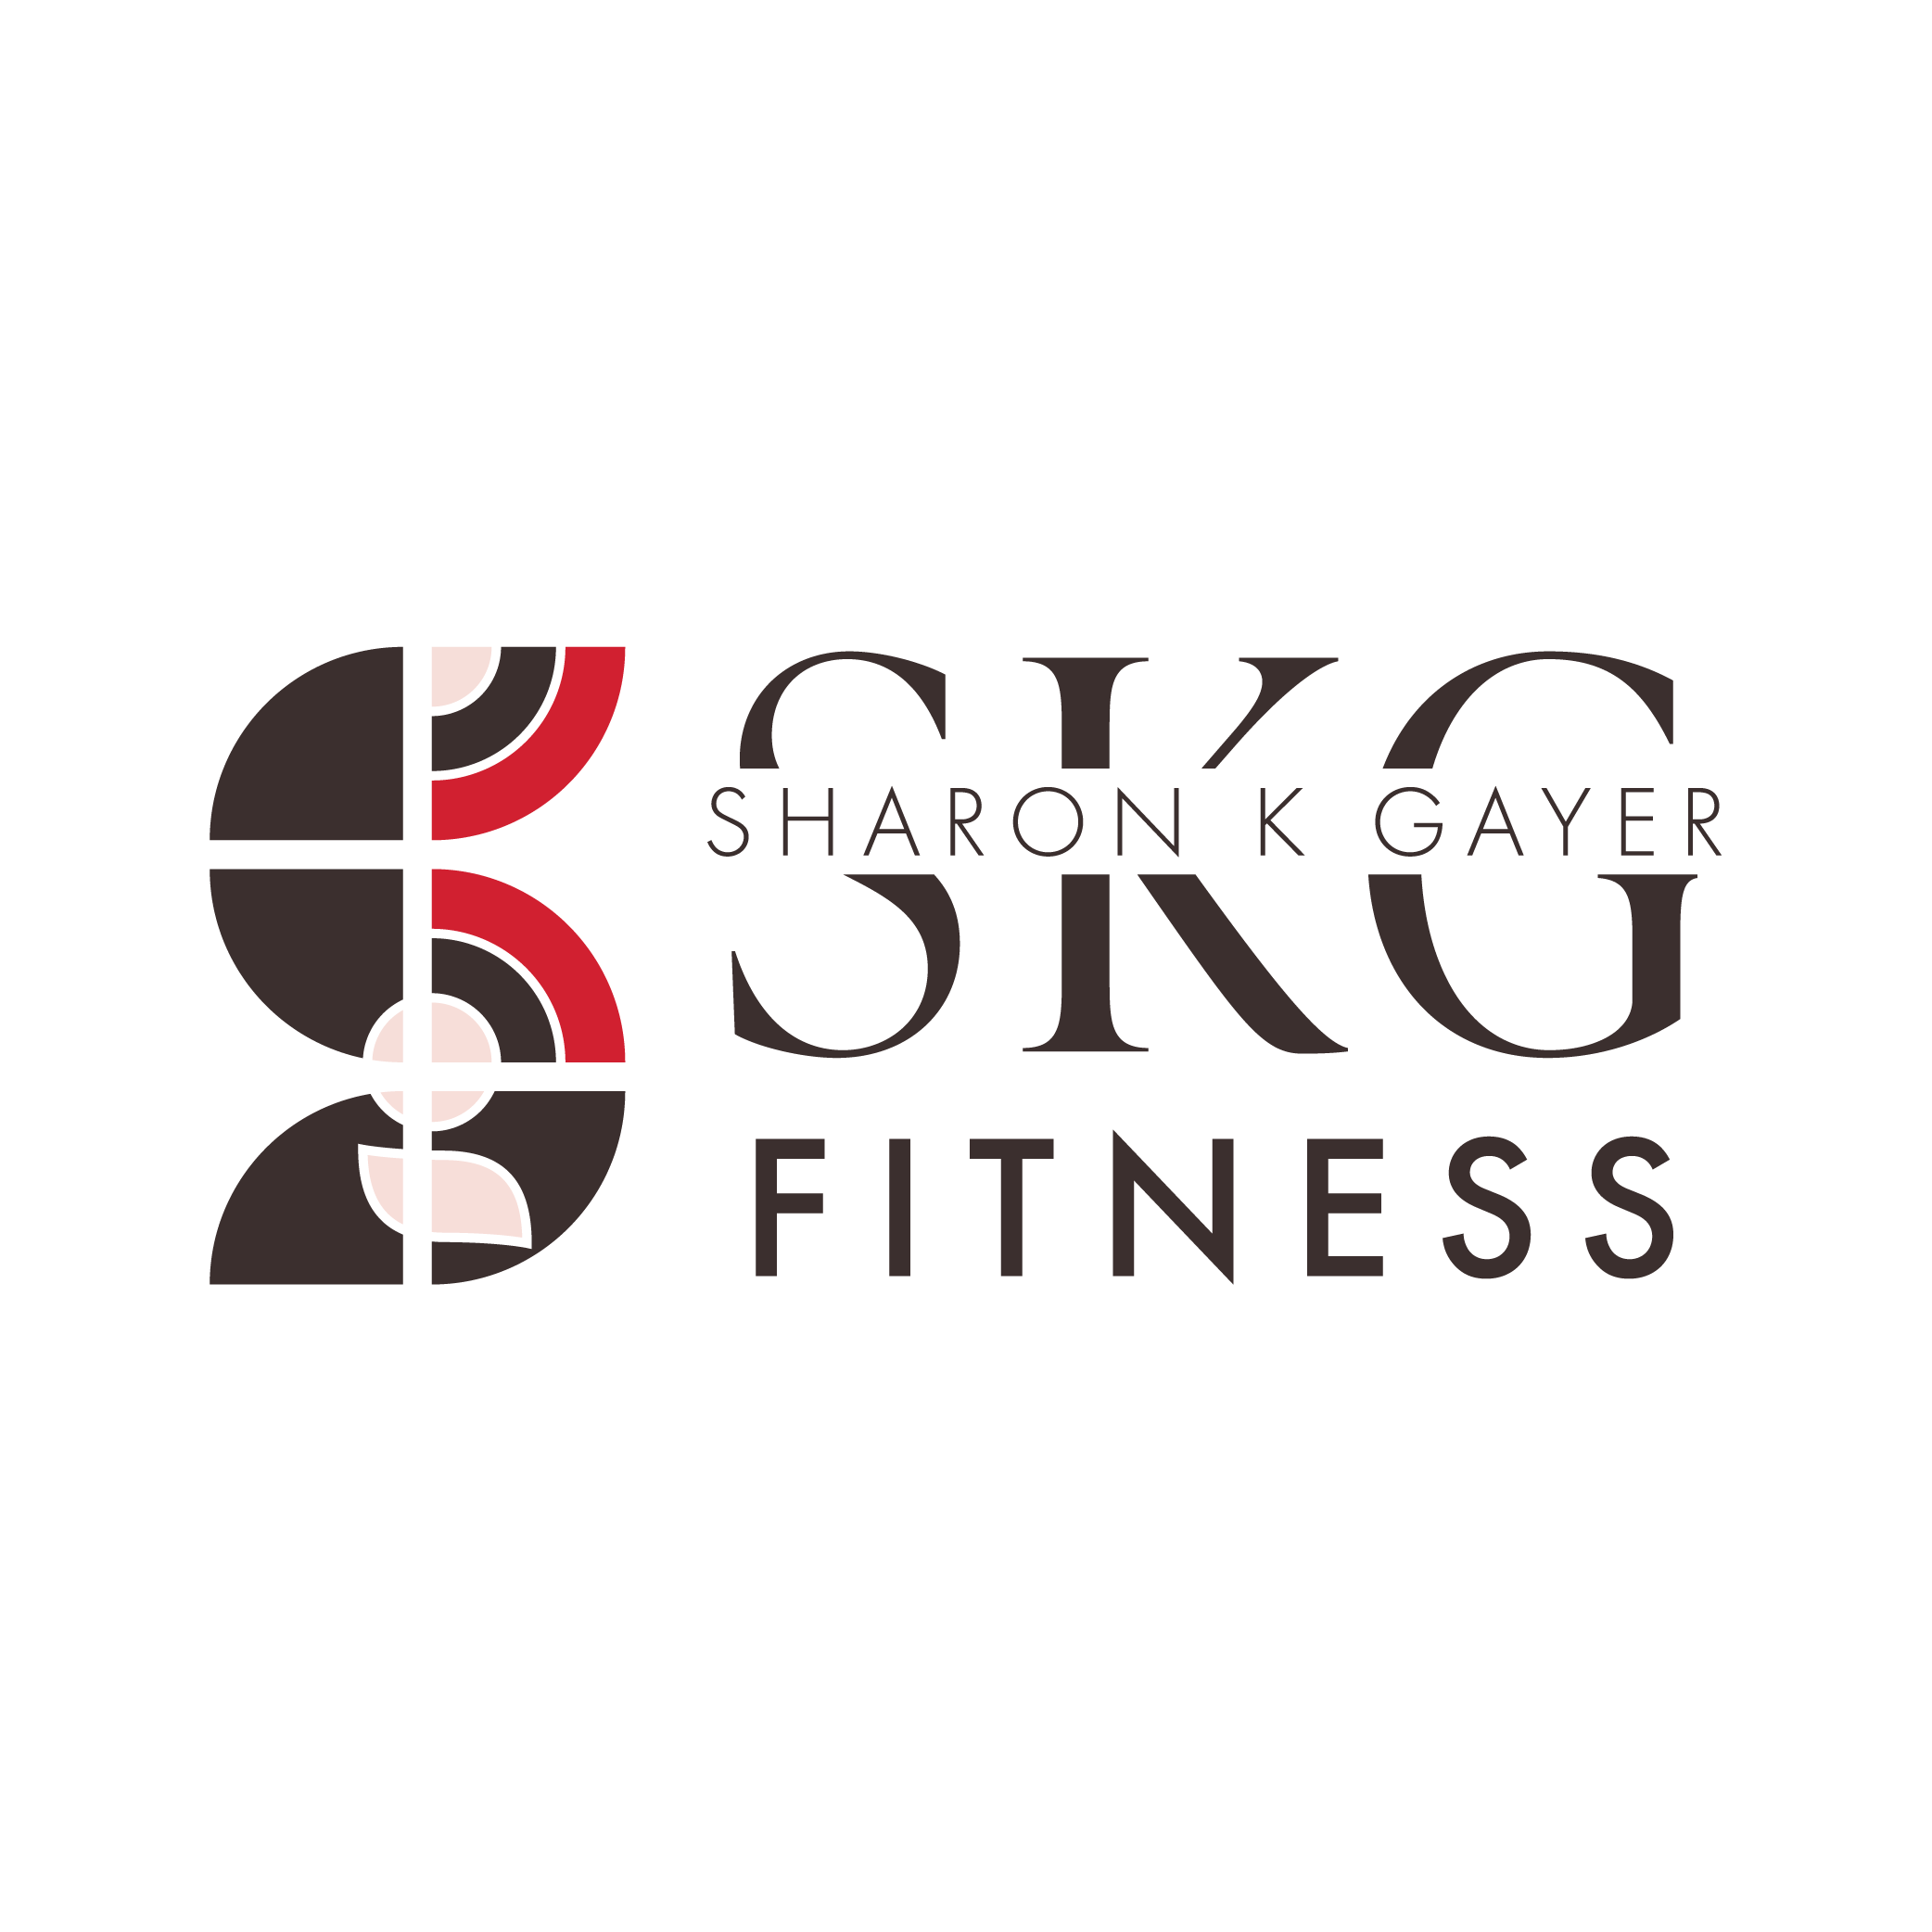 SKG Fitness Business Cards-02.png